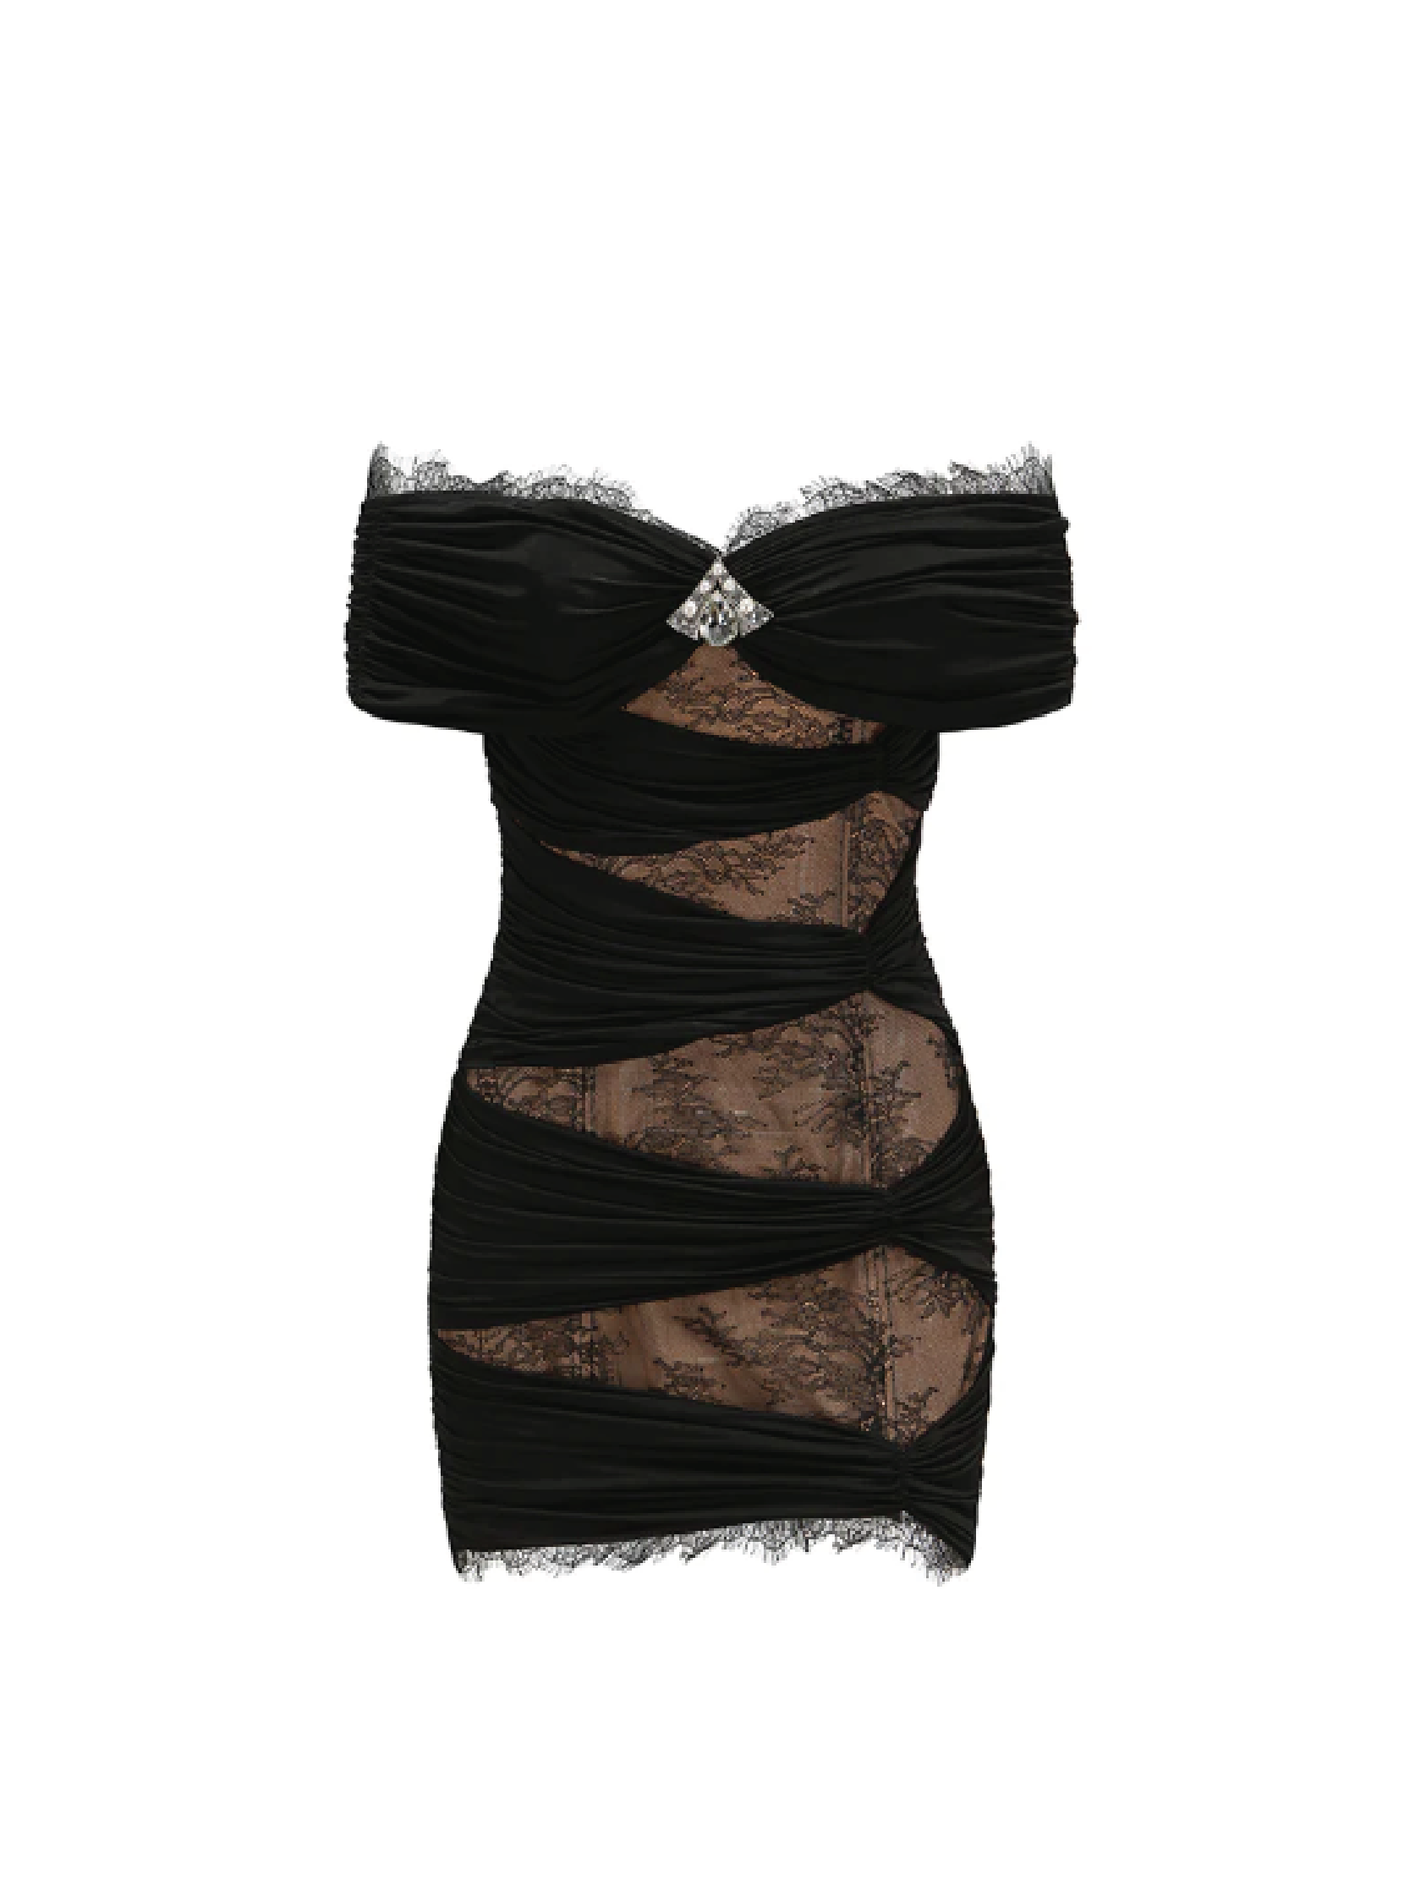 Daniela Lace Dress (Black) (Final Sale) – Nana Jacqueline